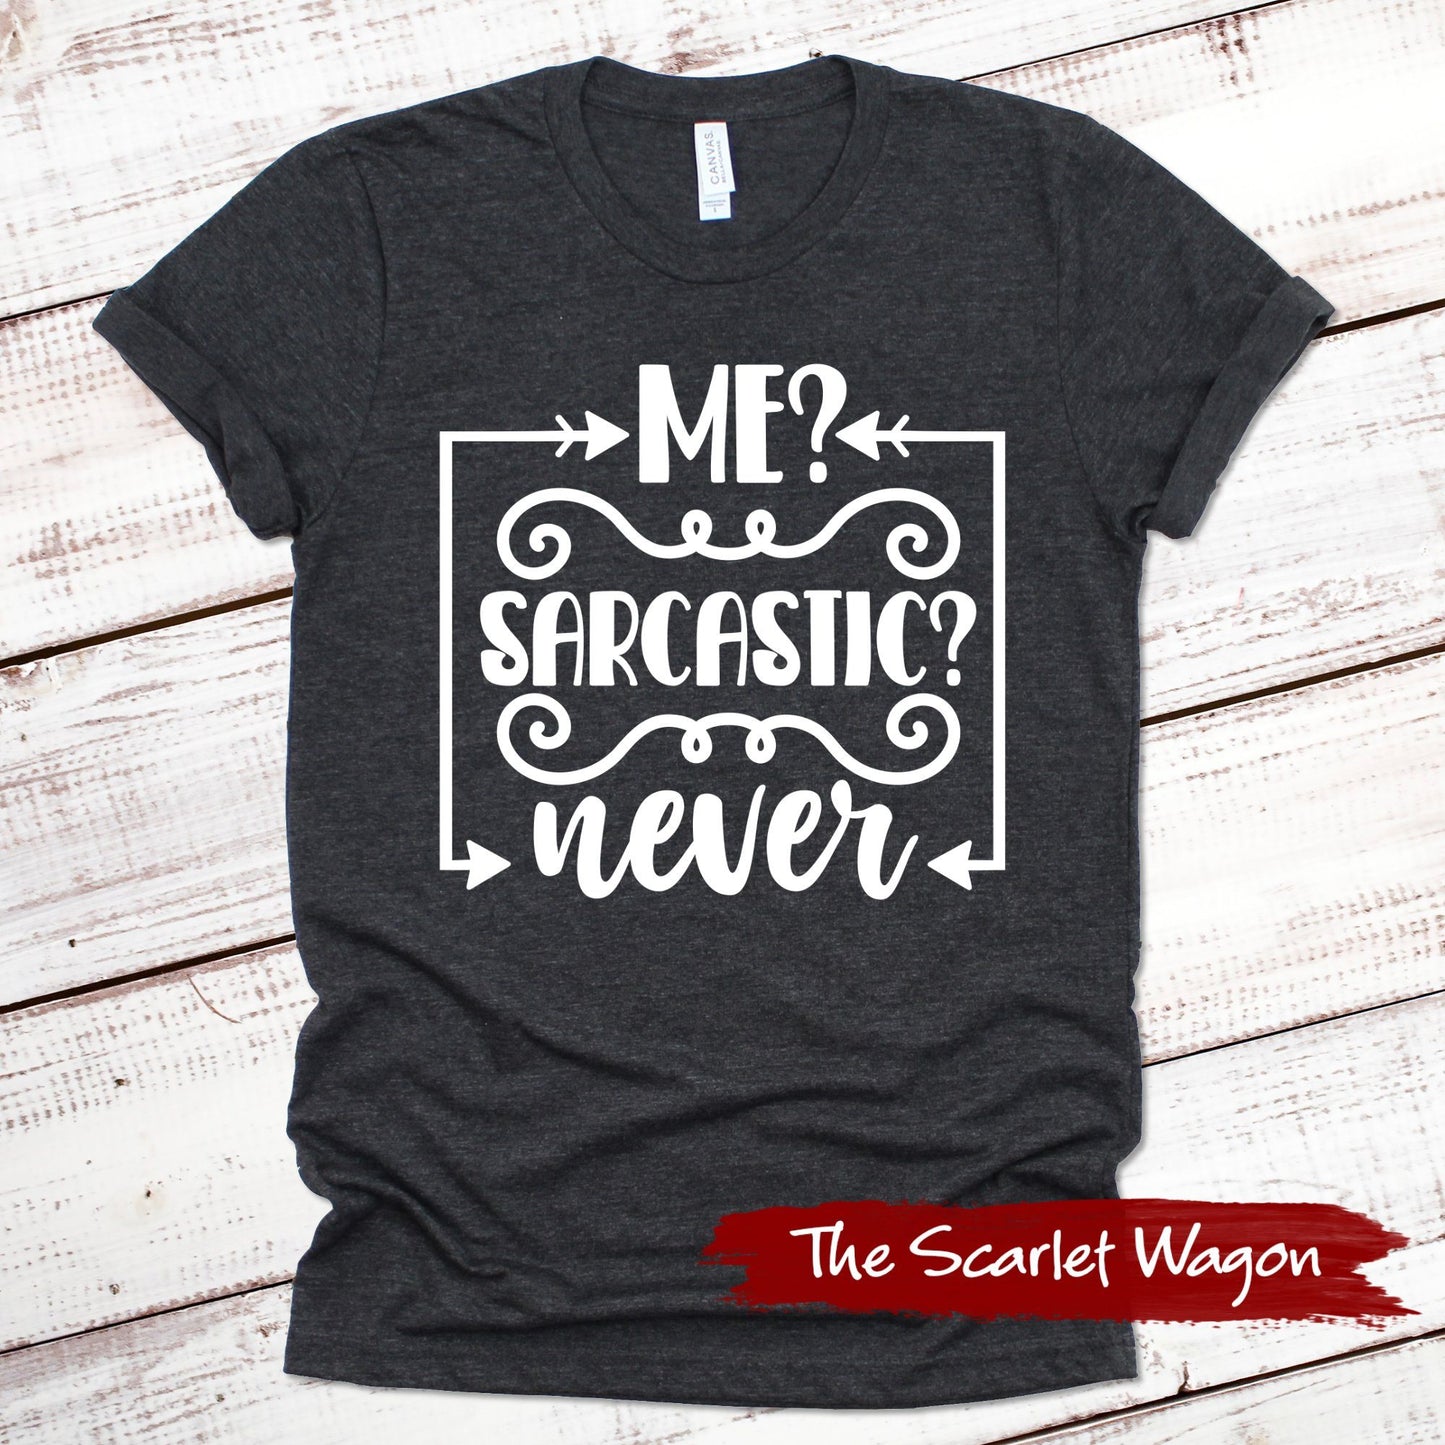 Me? Sarcastic? Never Funny Shirt Scarlet Wagon Dark Gray Heather XS 